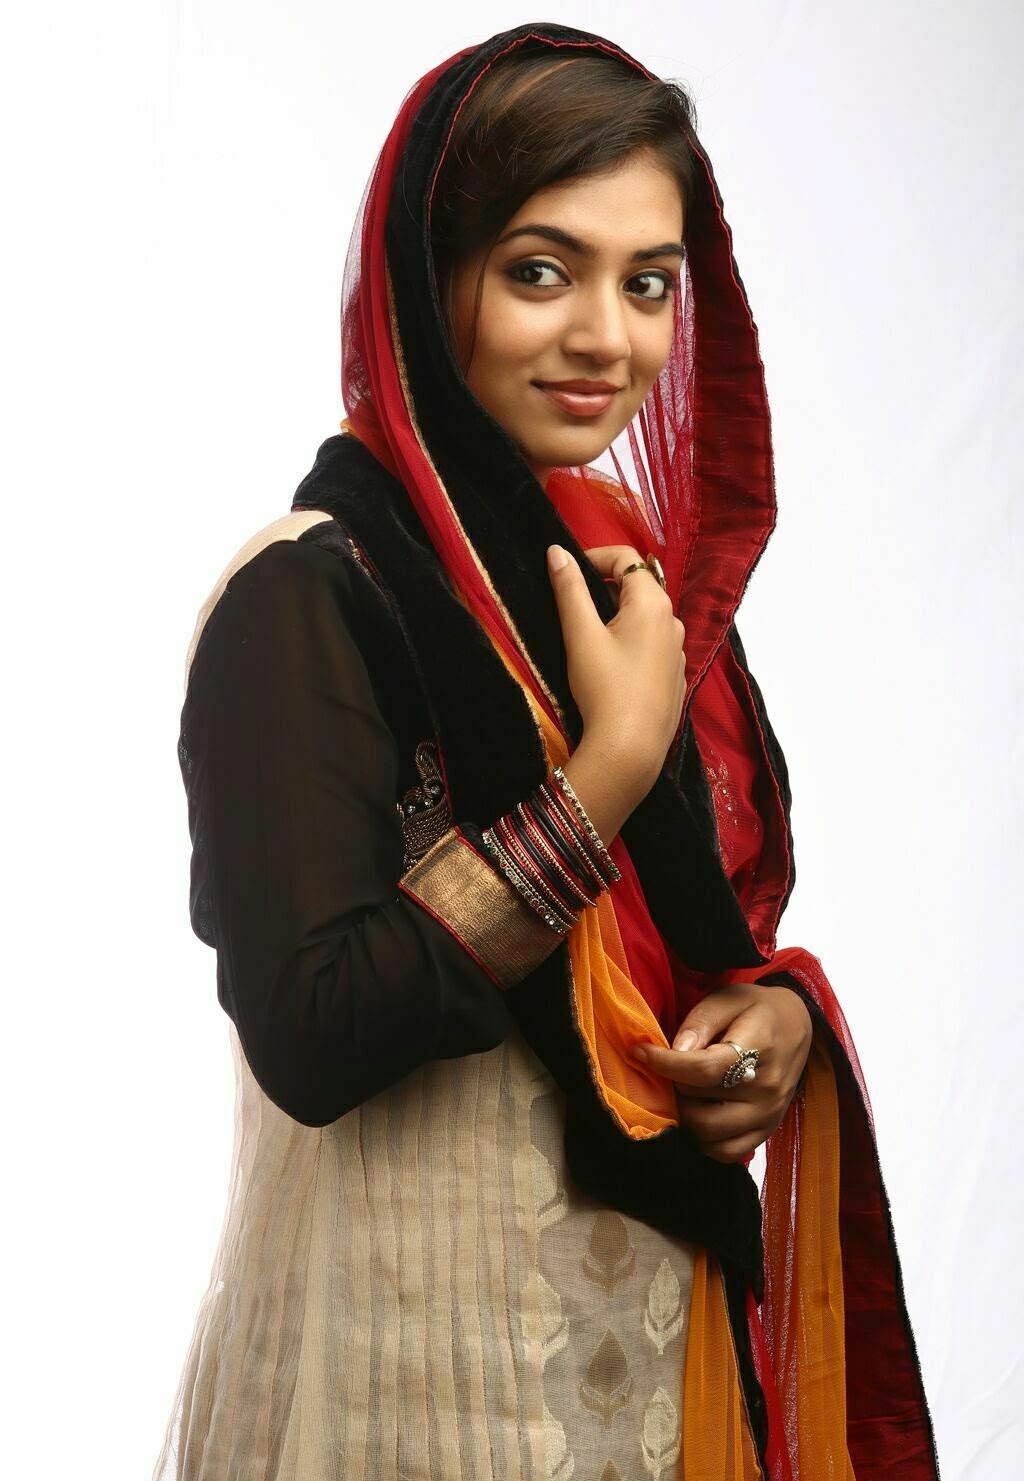 Nazriya Nazim Rising Indian Film Actress very hot and sexy pics Wallpapers Fee Download